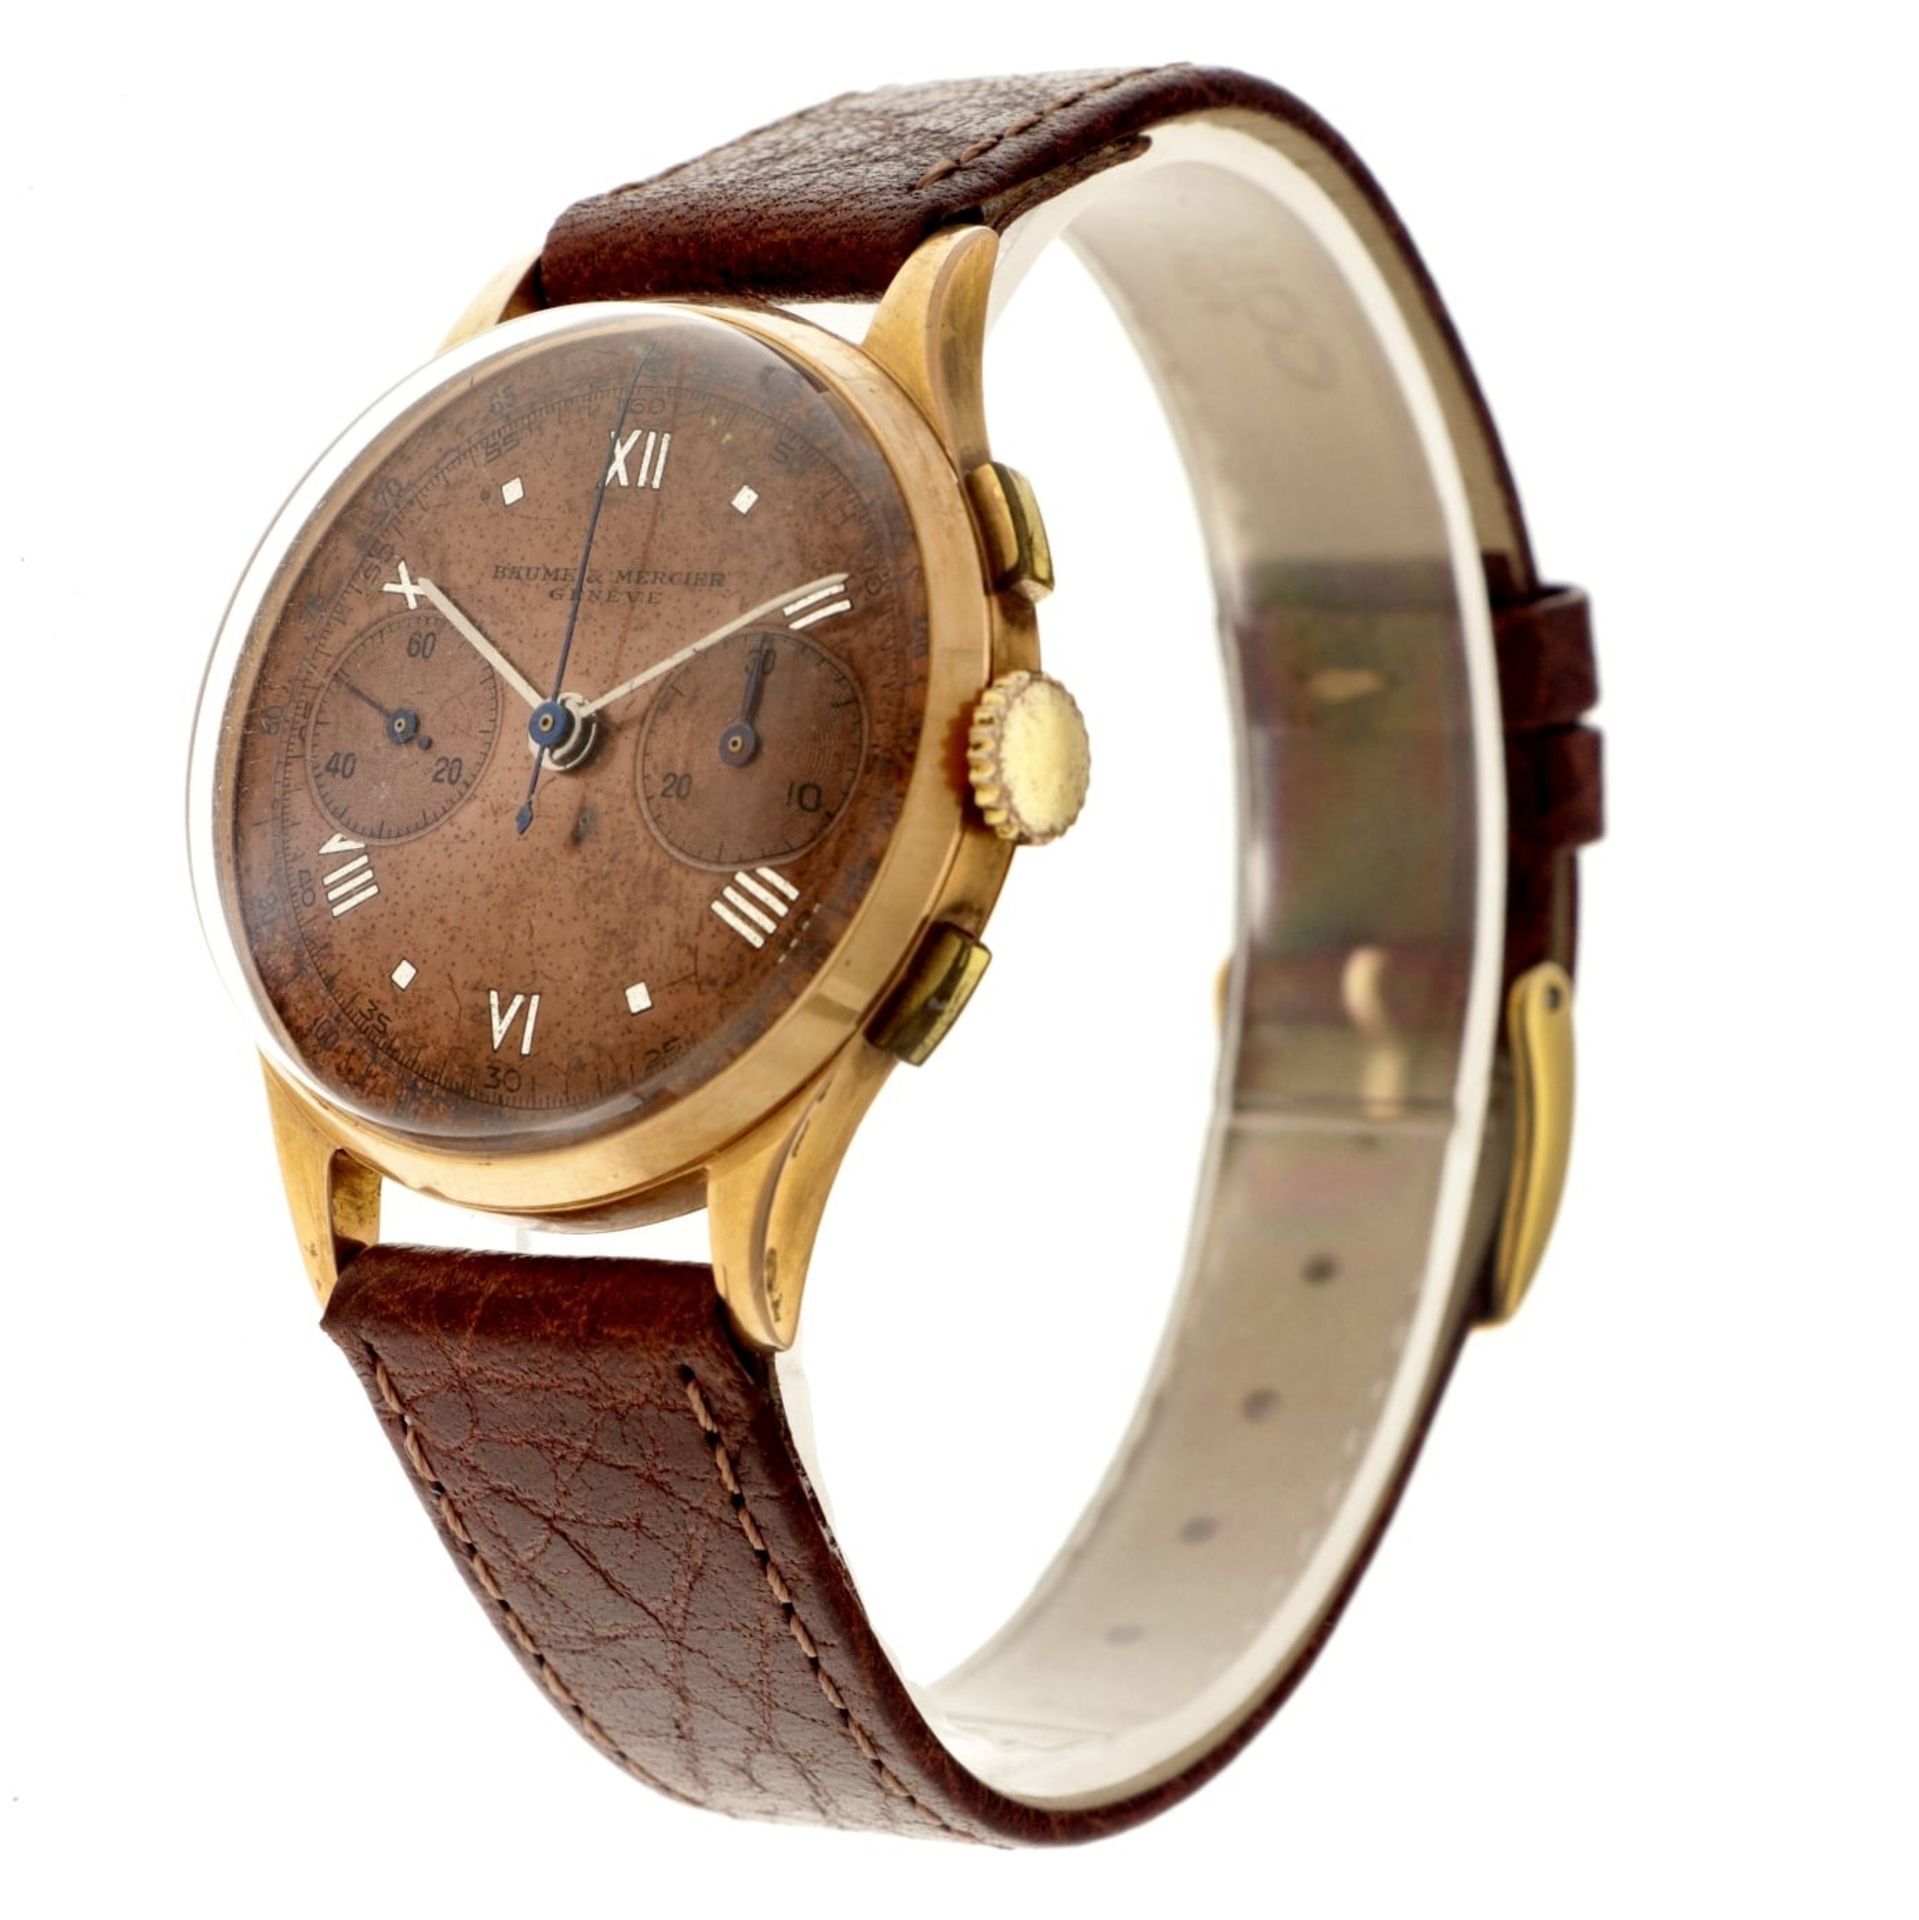 No Reserve - Baume & Mercier vintage 18K. chronograph - Men's watch. - Image 2 of 6